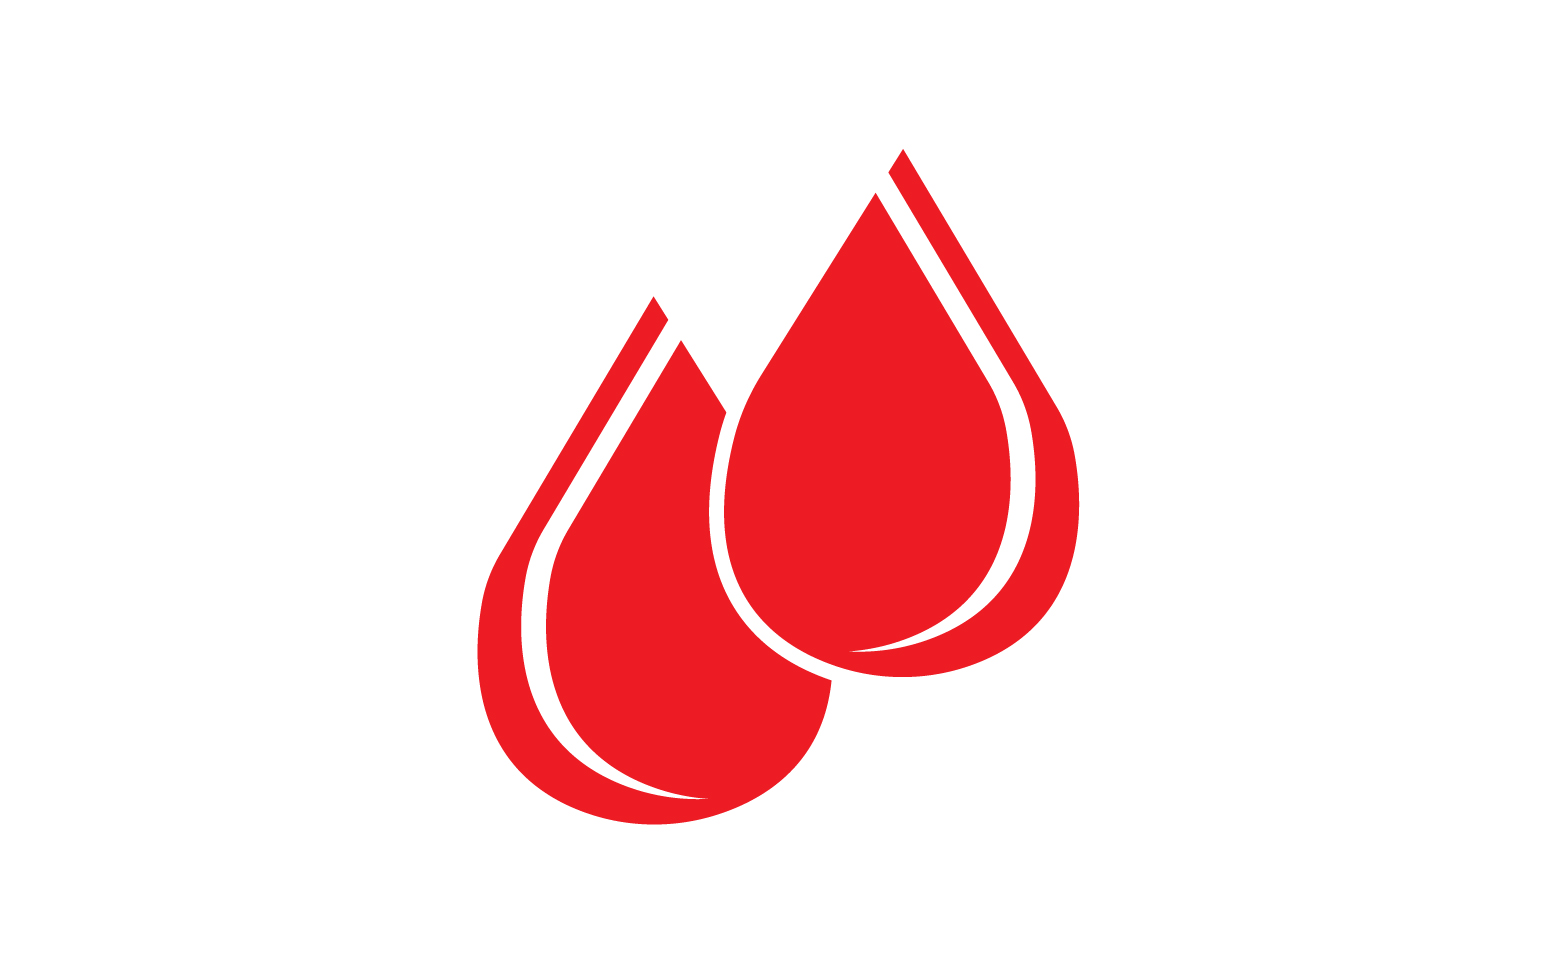 Blood drop icon logo vector element  v10